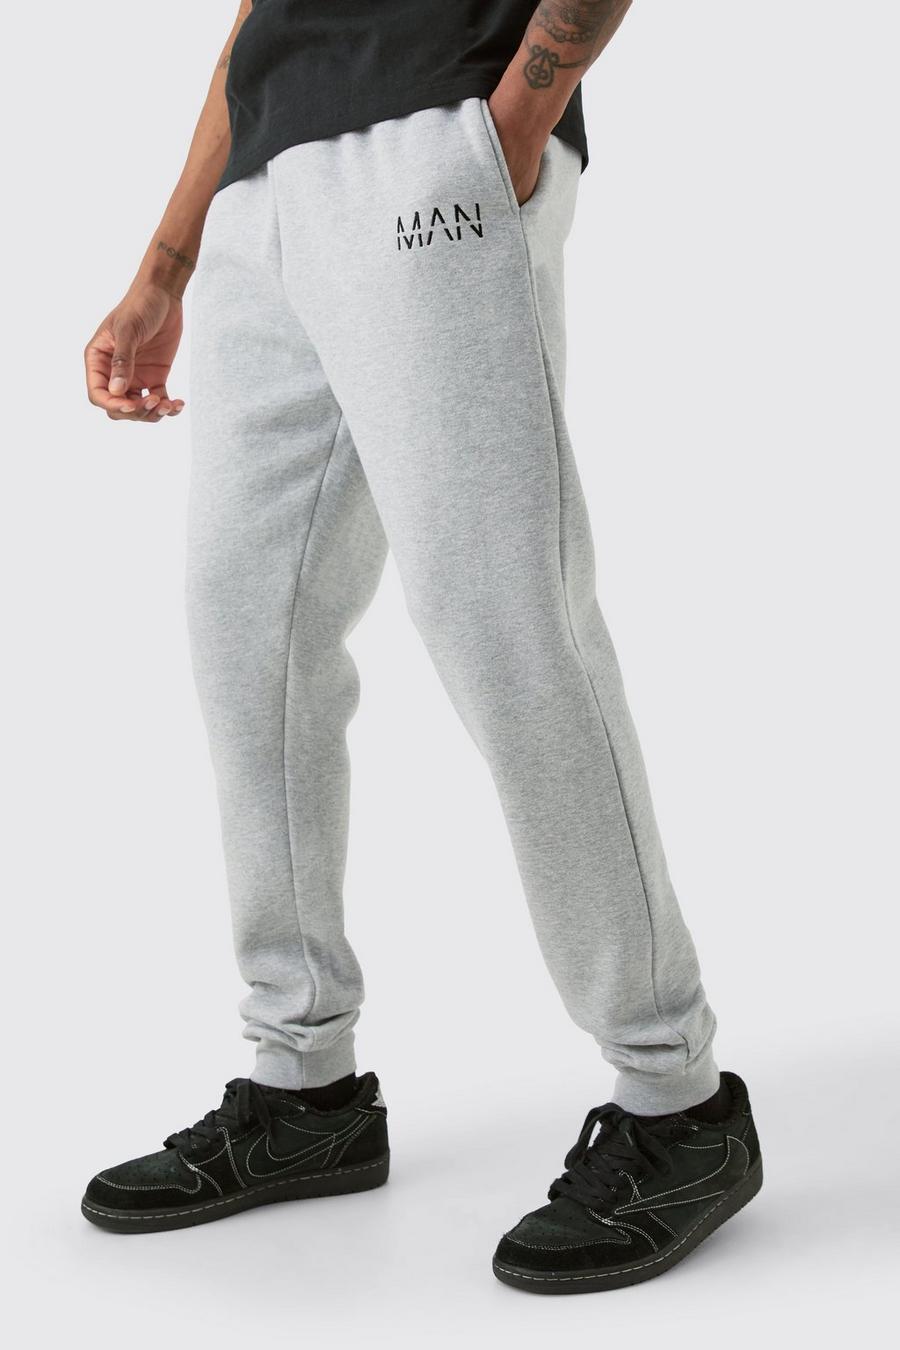 Pantaloni tuta Tall Man Dash Slim Fit in mélange grigio, Grey marl